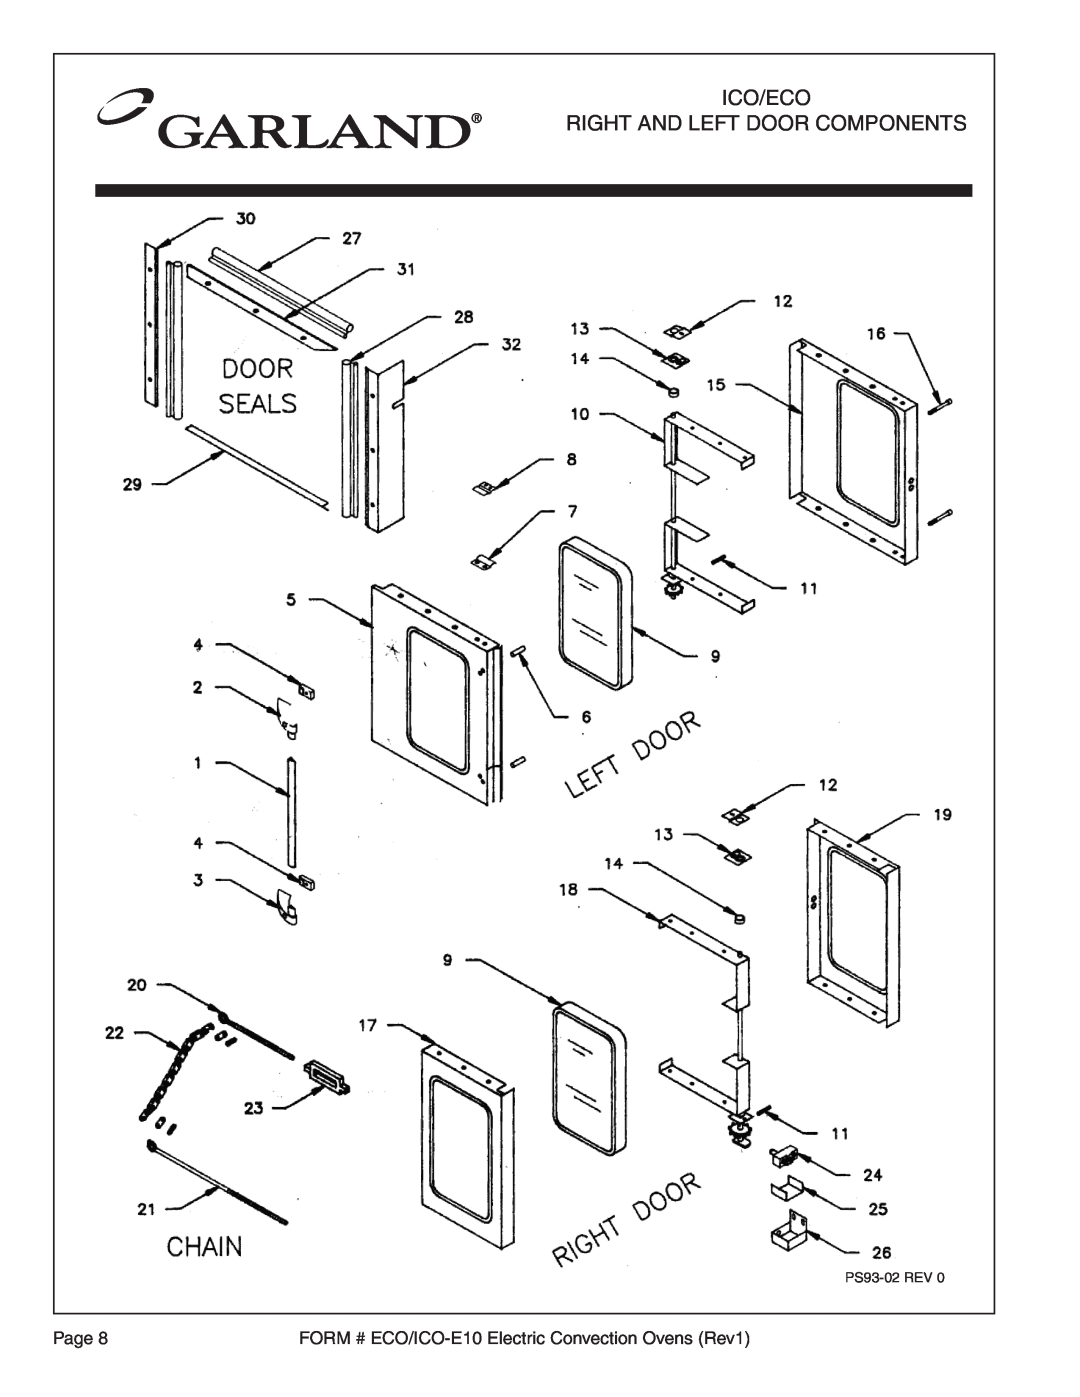 Garland ICO-E-20, ECO-E10, EC0-E-20, ICO-E10 manual Ico/Eco Right And Left Door Components, PS93-02REV 